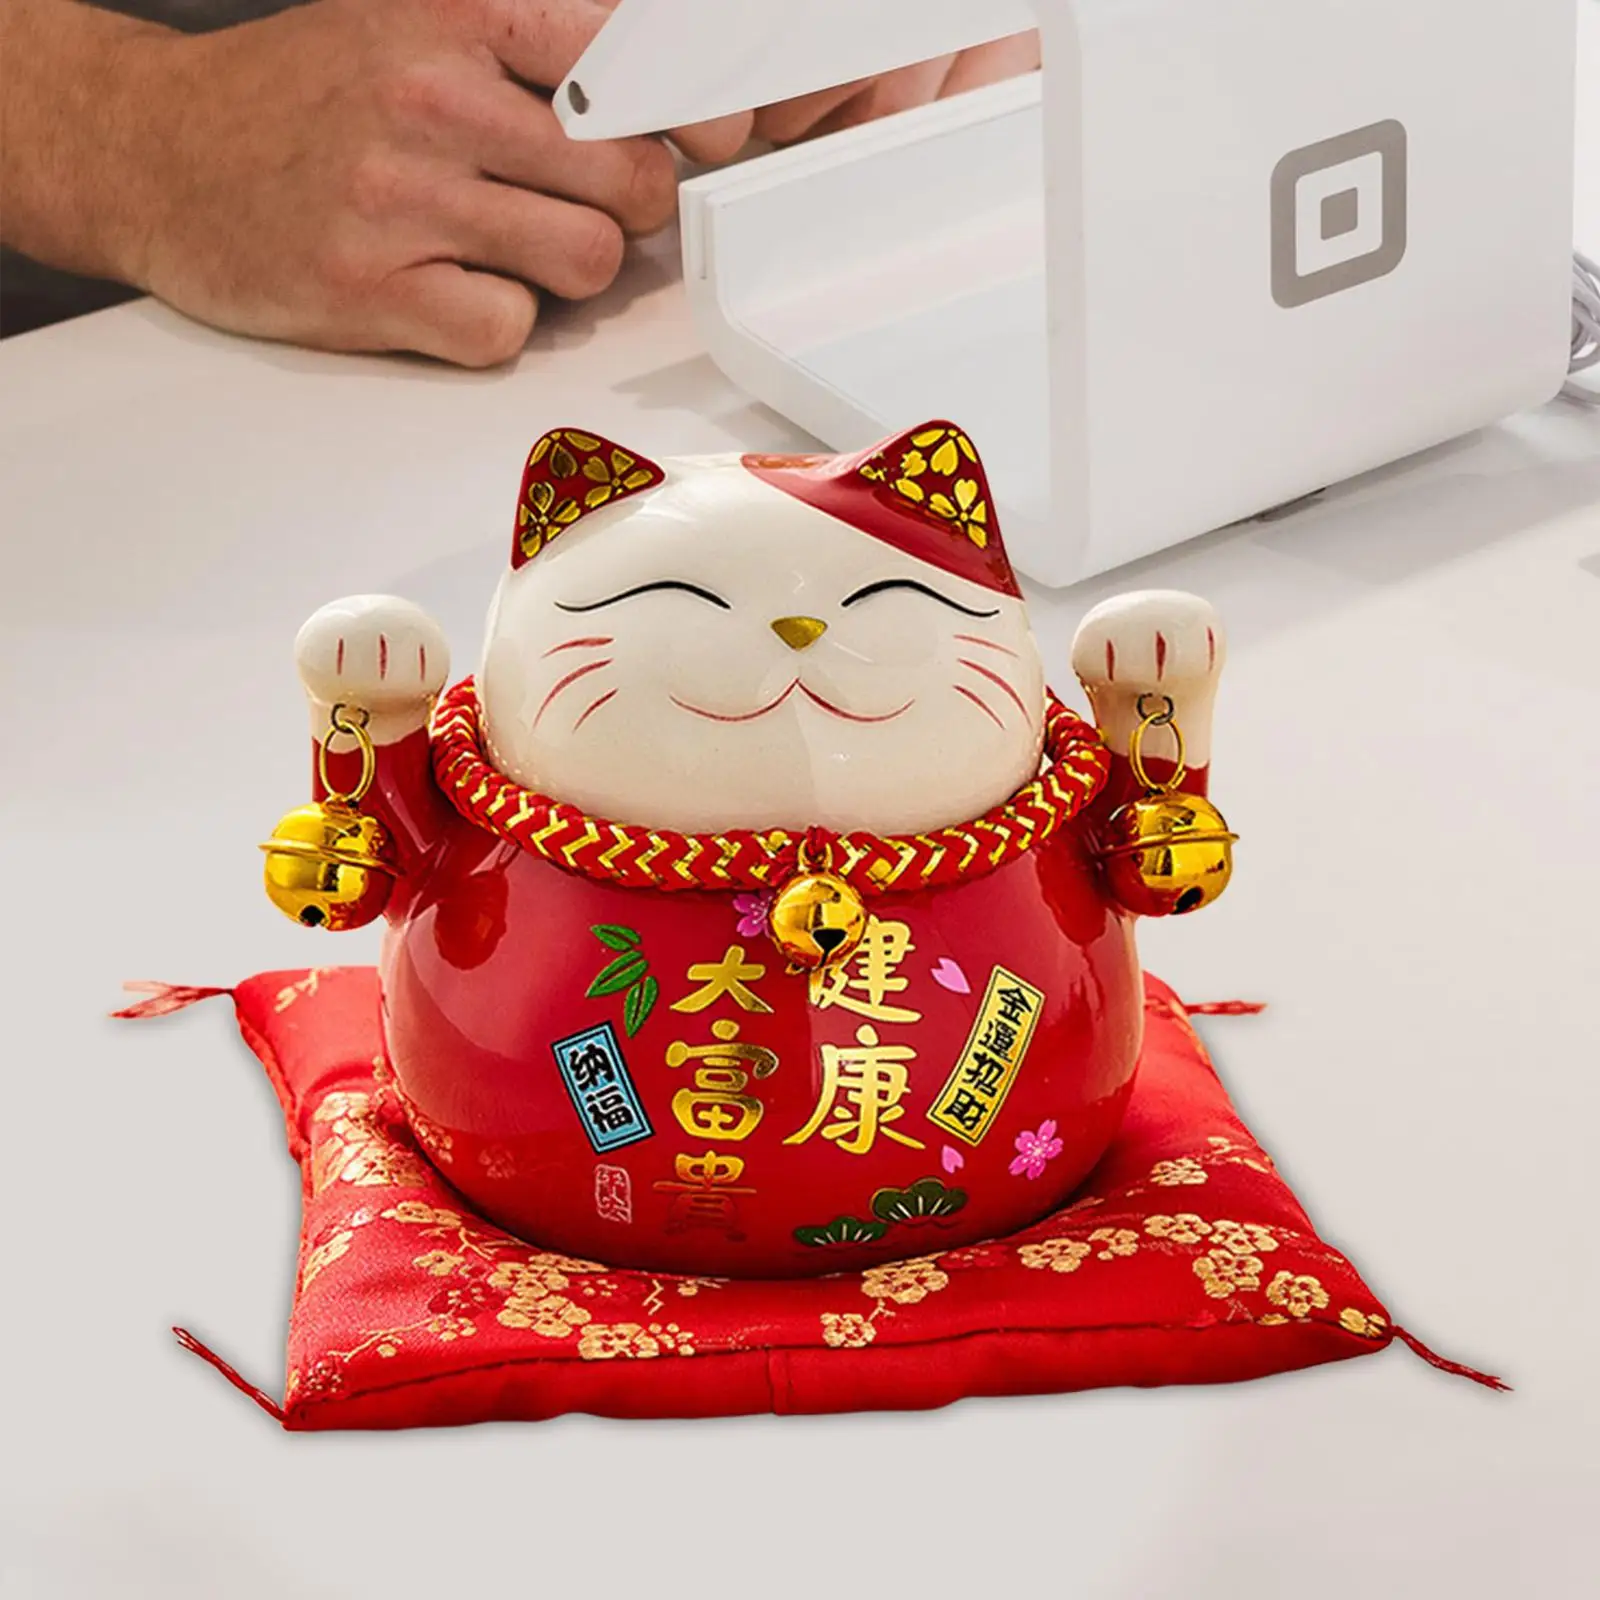 Cute Maneki Neko Good Luck Cat Piggy Bank Ceramic Figurine Blessing Ornament